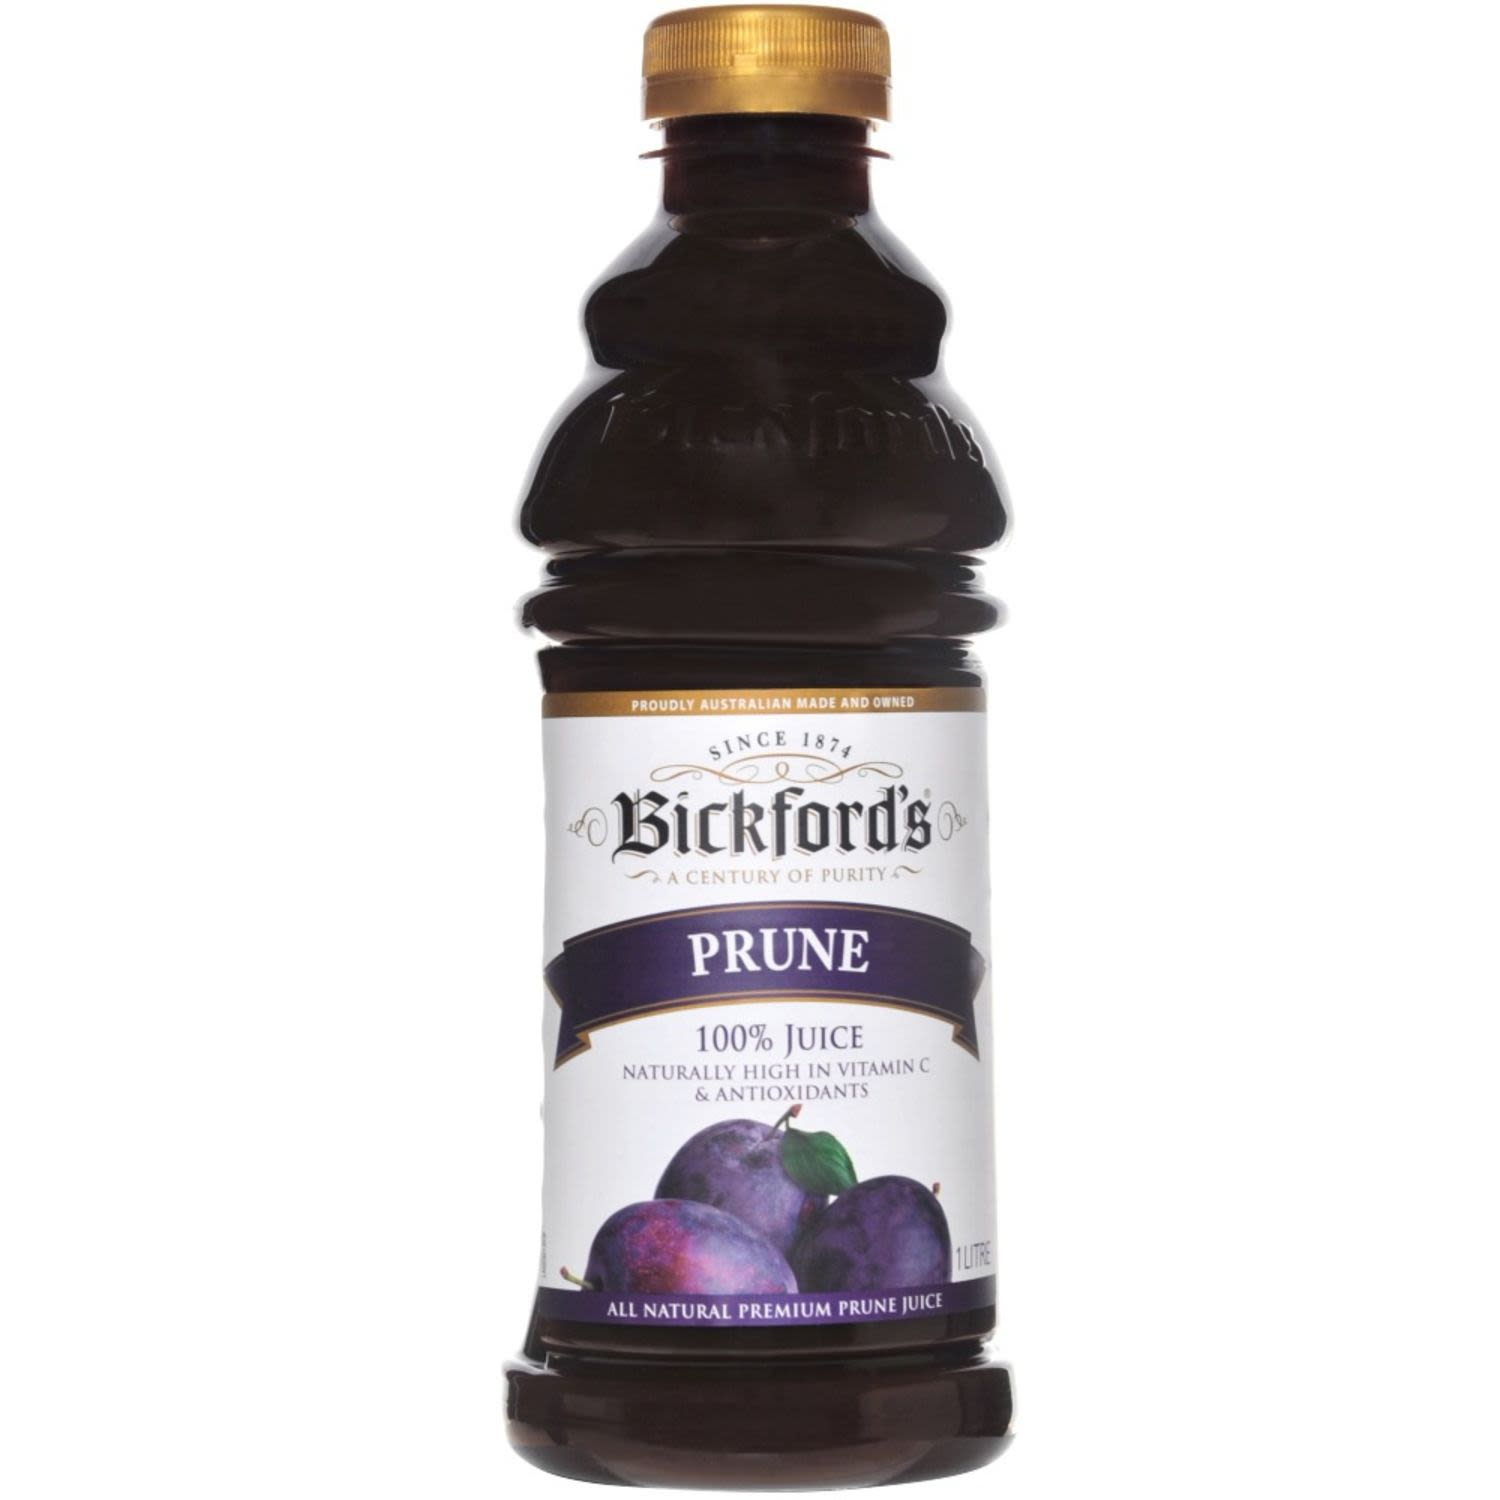 Bickford's Prune Juice, 1 Litre